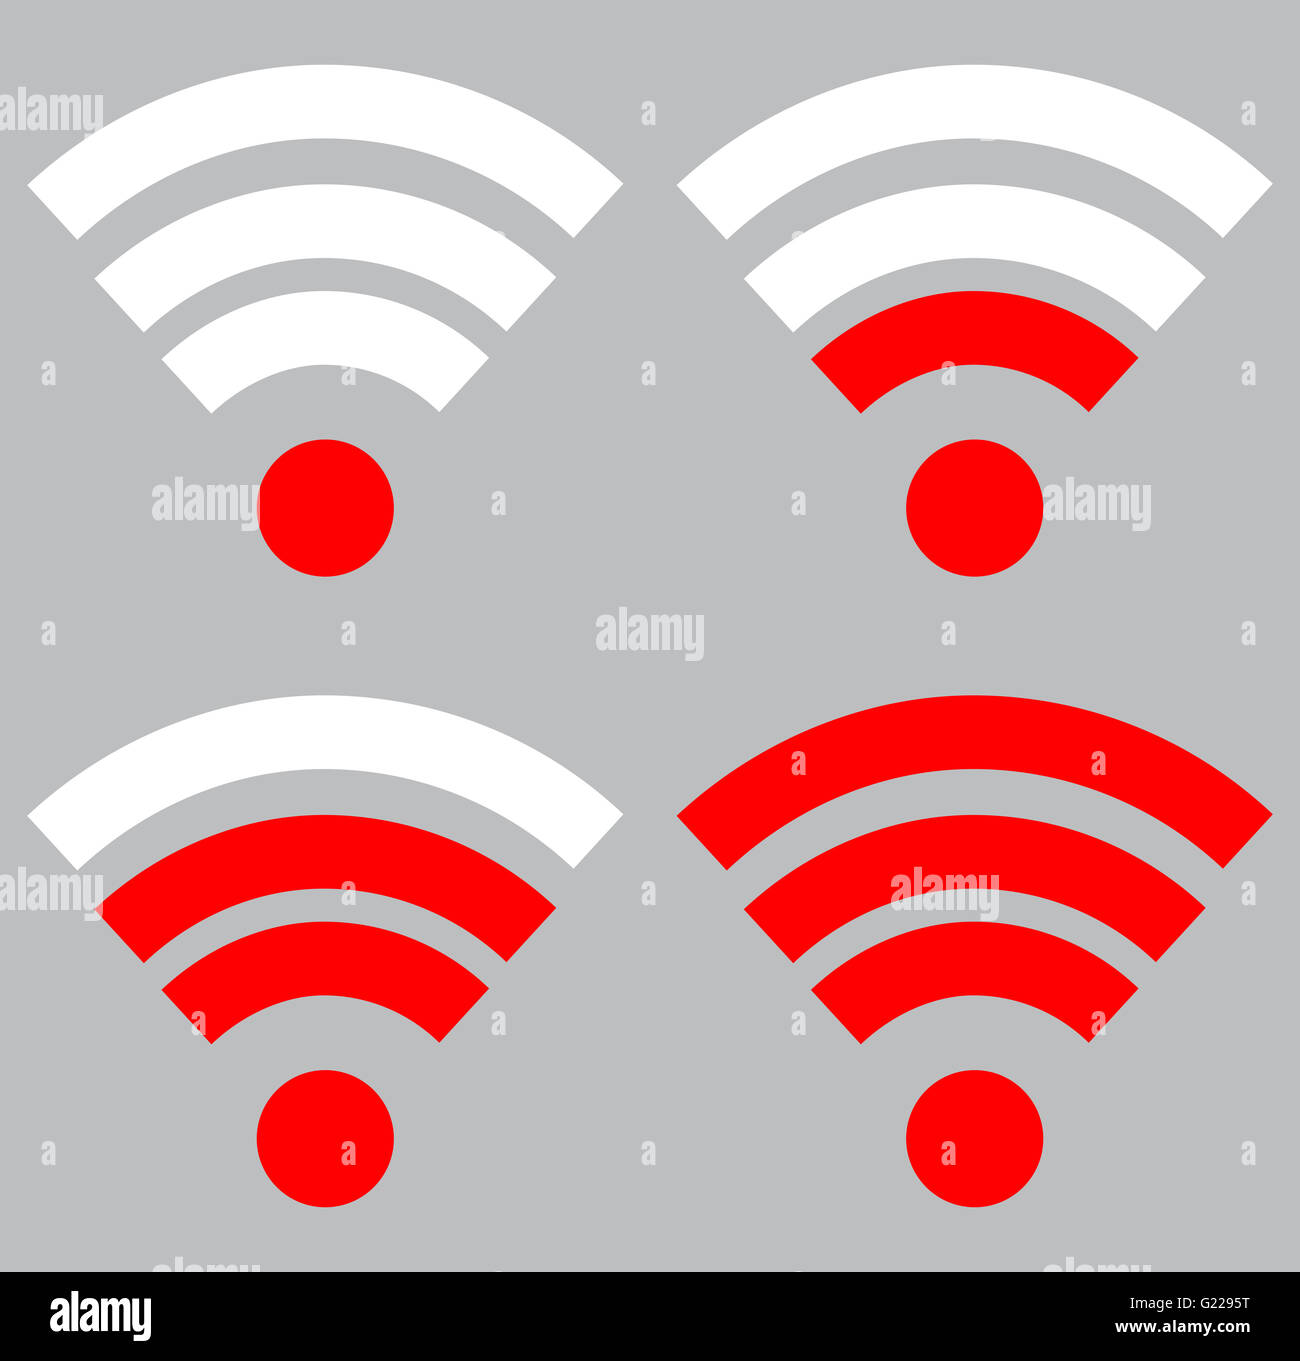 Wi-Fi-Signalstärke. Drahtlose Verbindung und Stärke WLAN signal Indikator Ebene Wifi Internet. Vektor flache Bauweise illustra Stockfoto